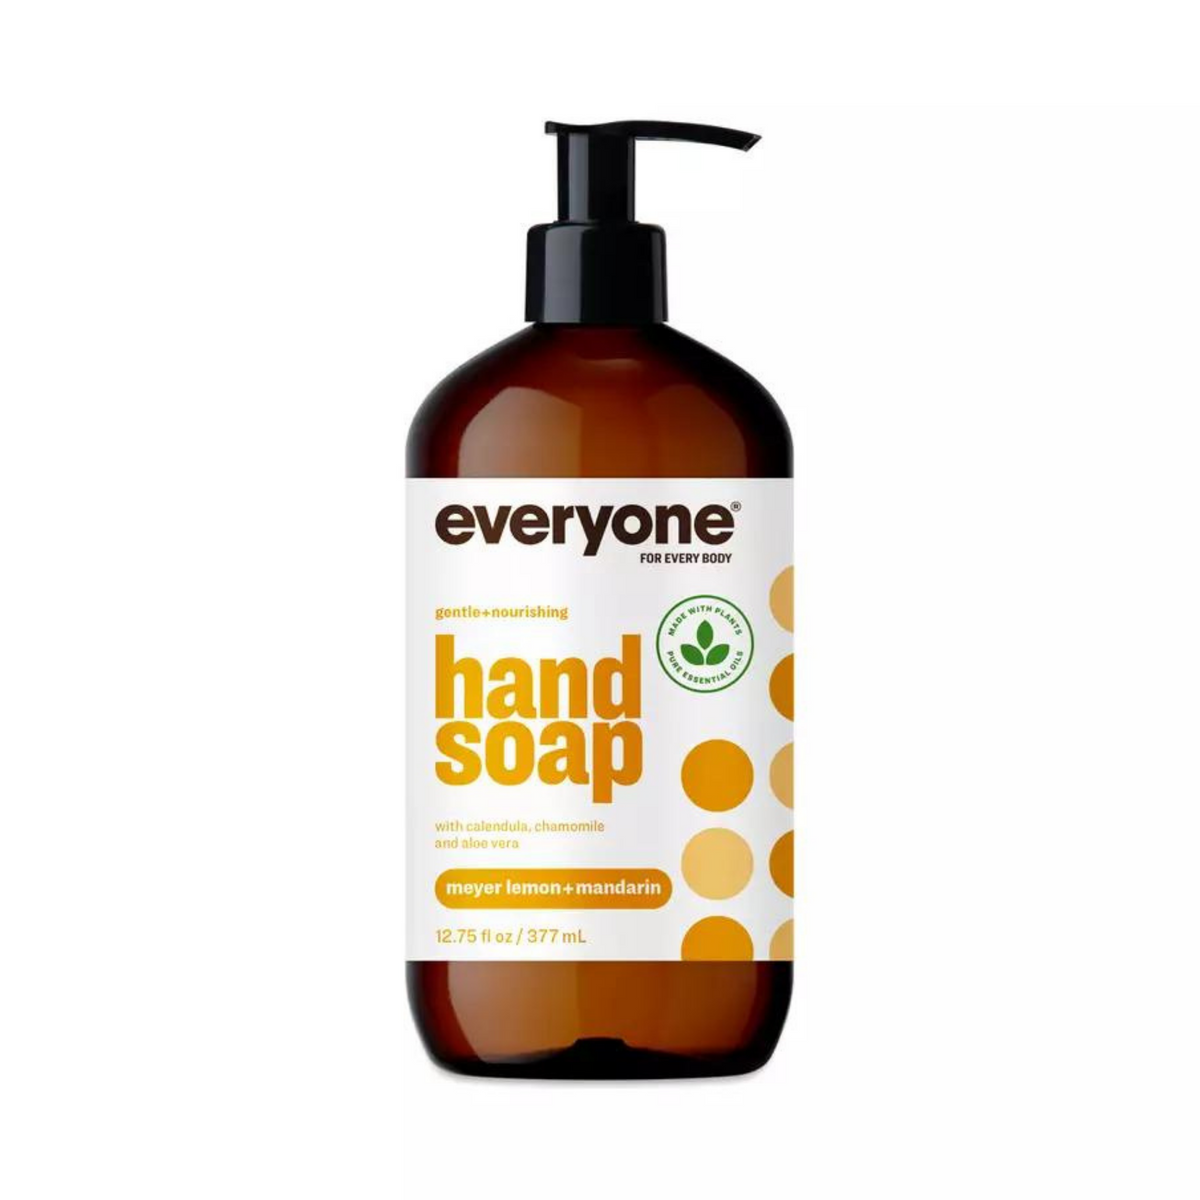 Primary image of Everyone Meyer Lemon + Mandarin Hand Soap